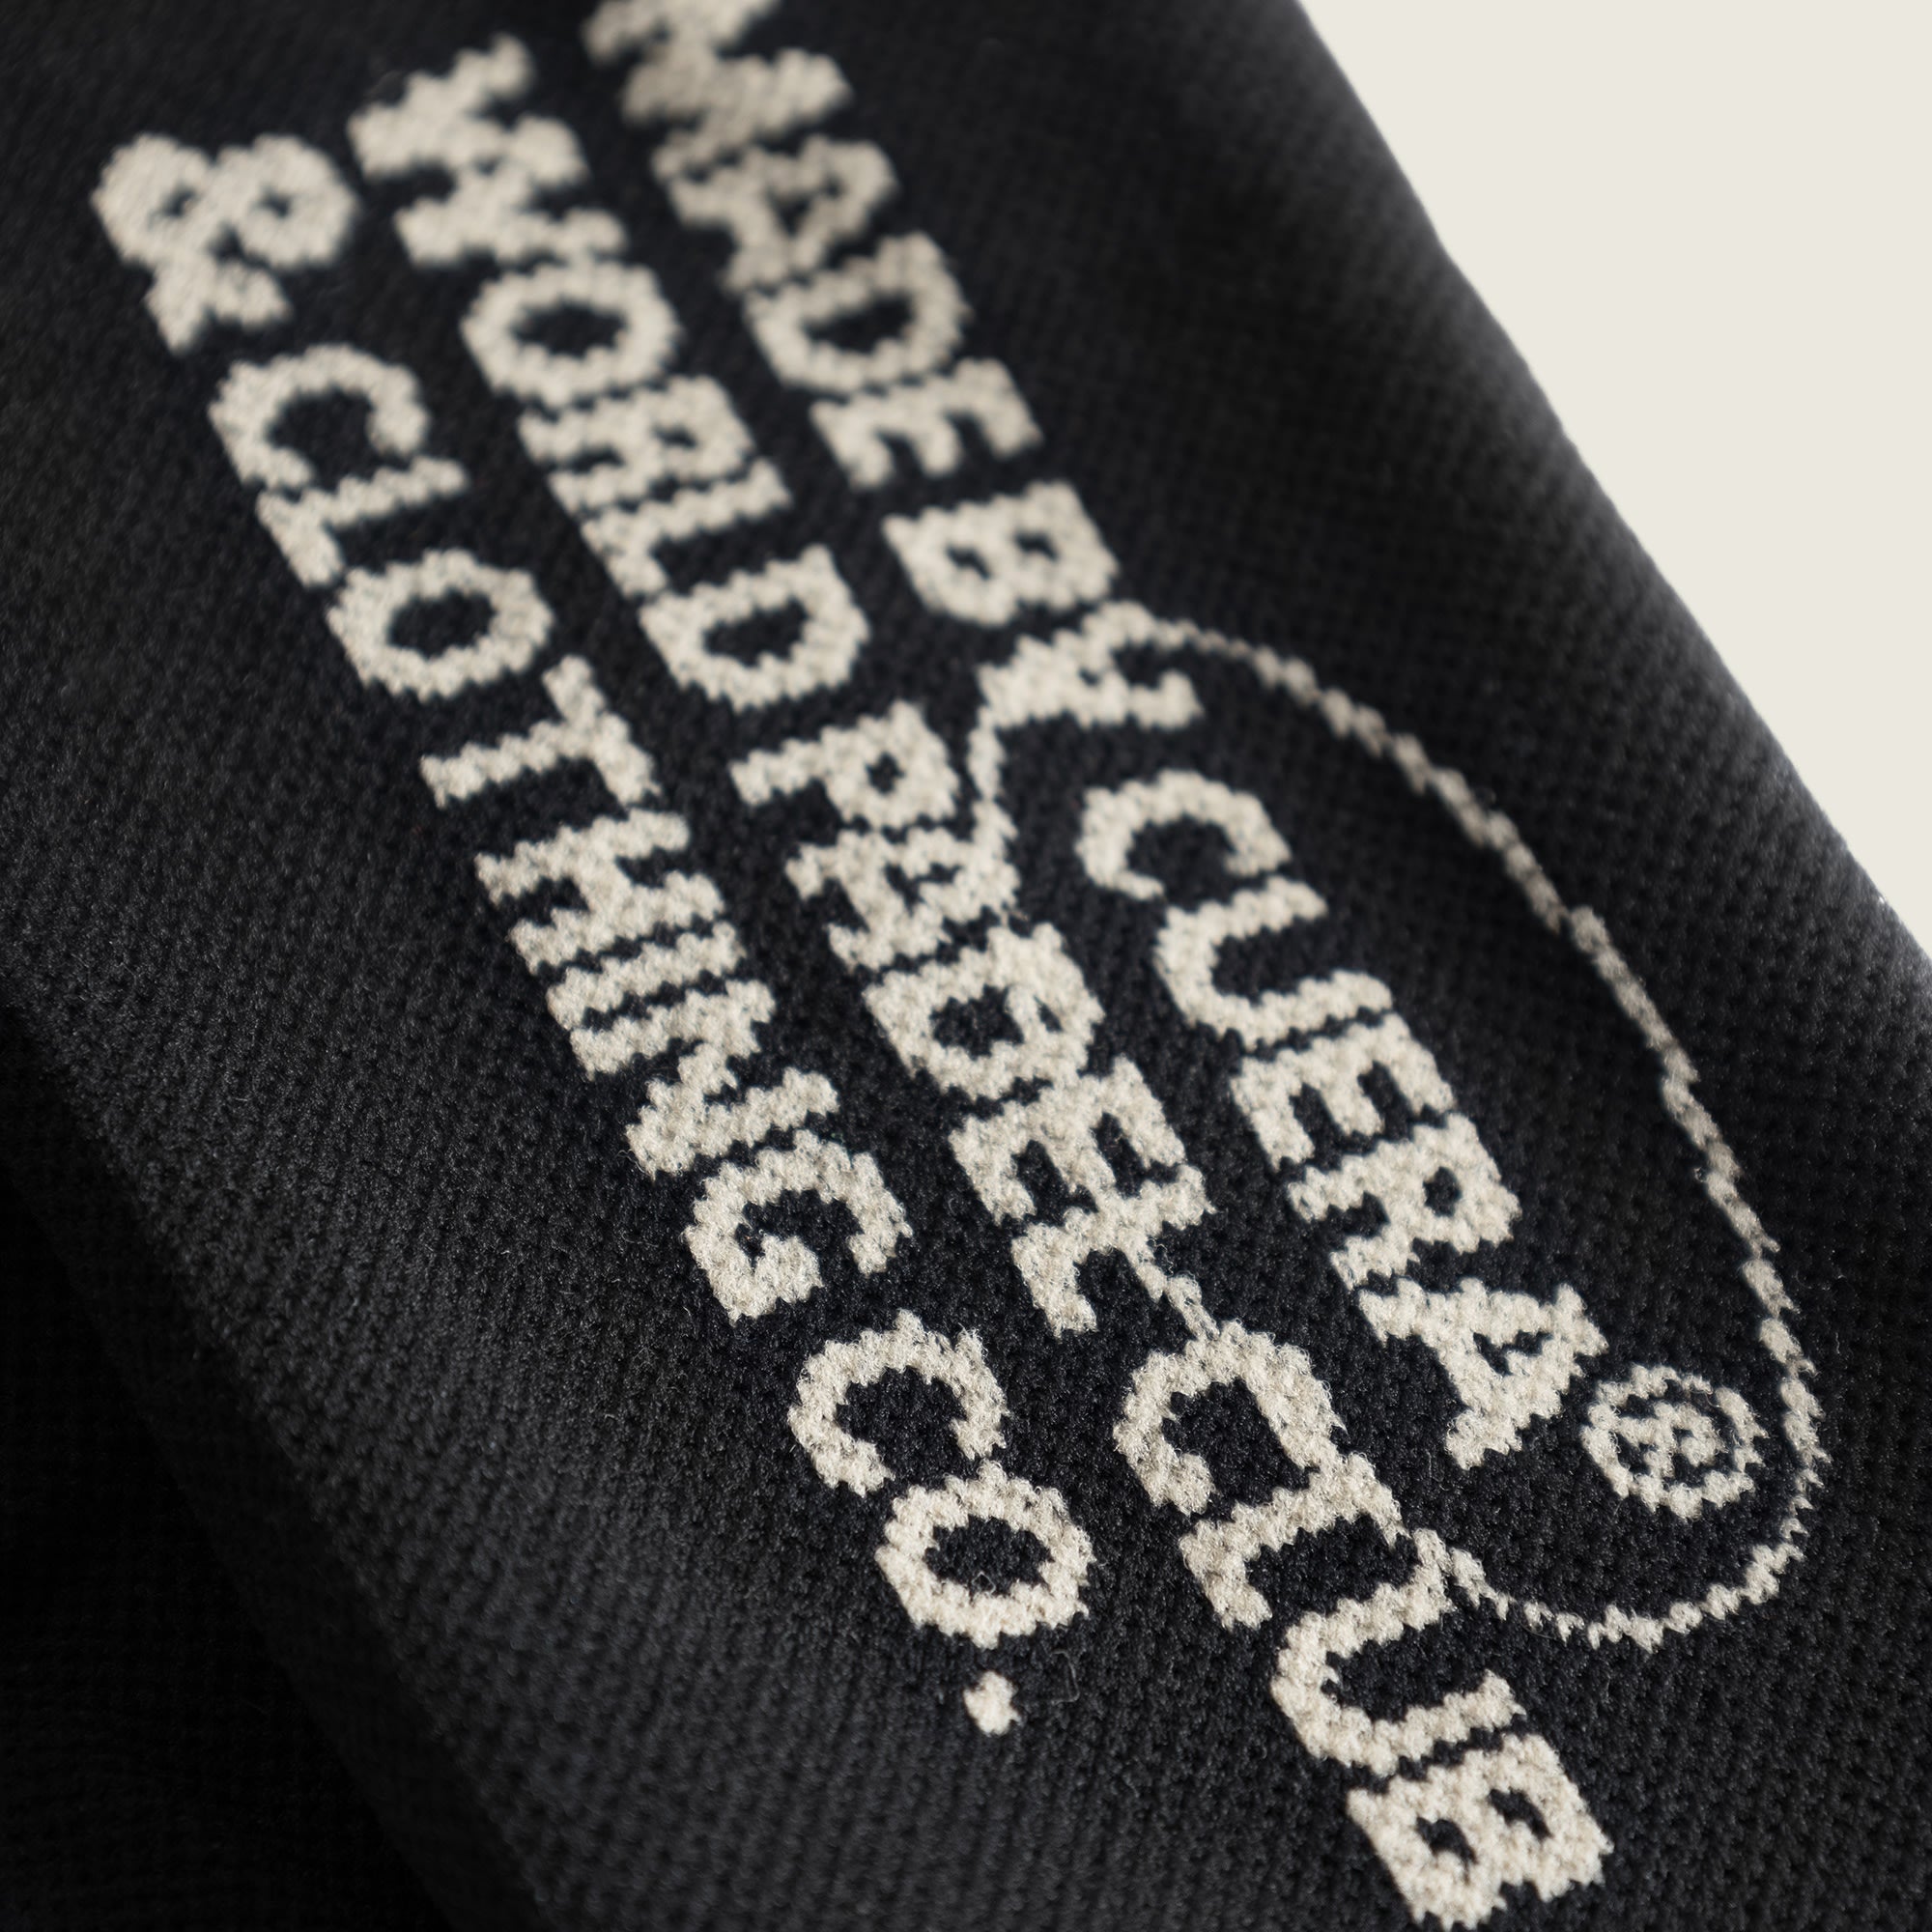 Premium Padel Sport Socks - Black